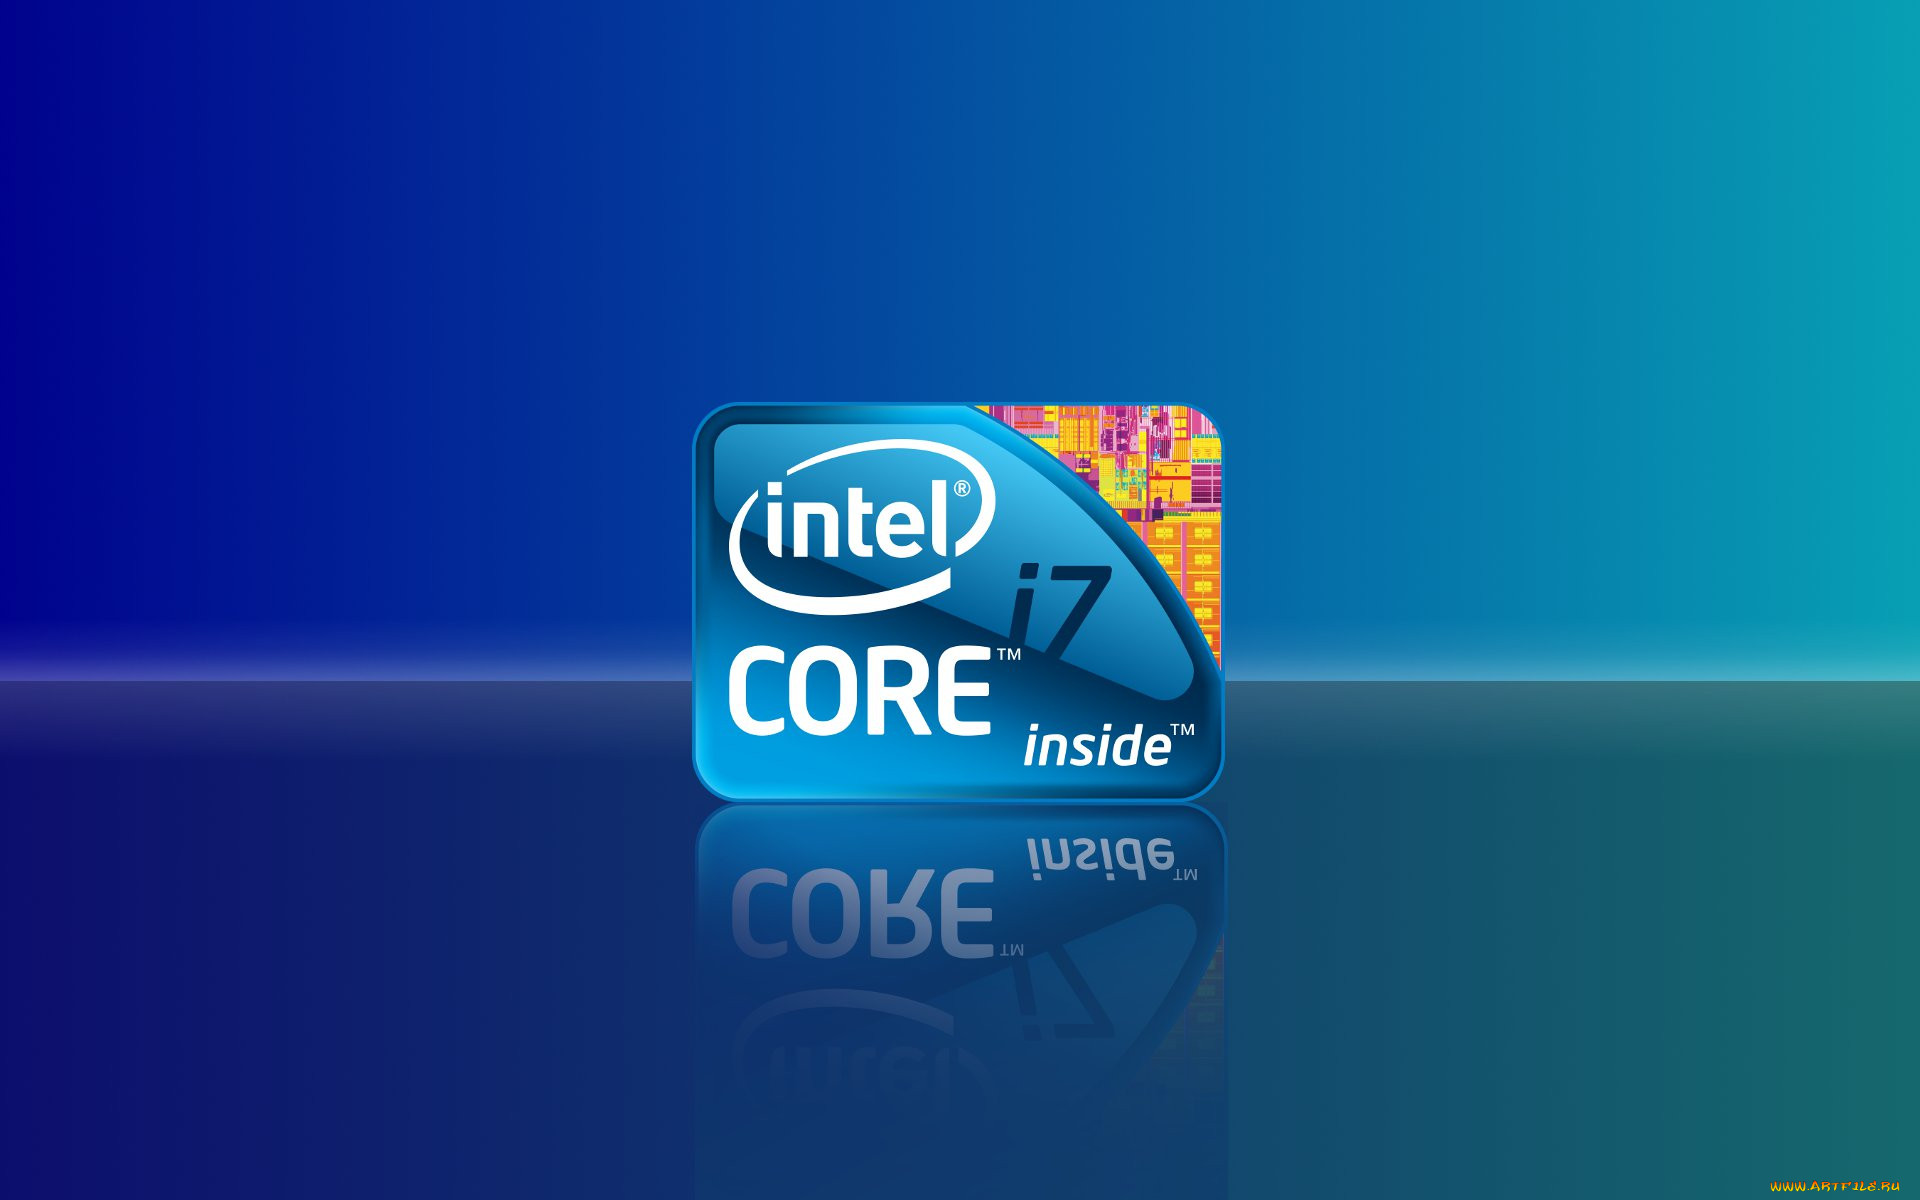 Core i3 games. Intel Core i7 inside. Intel Core i7 икон. Intel inside Core i7 logo. Intel i7 inside.